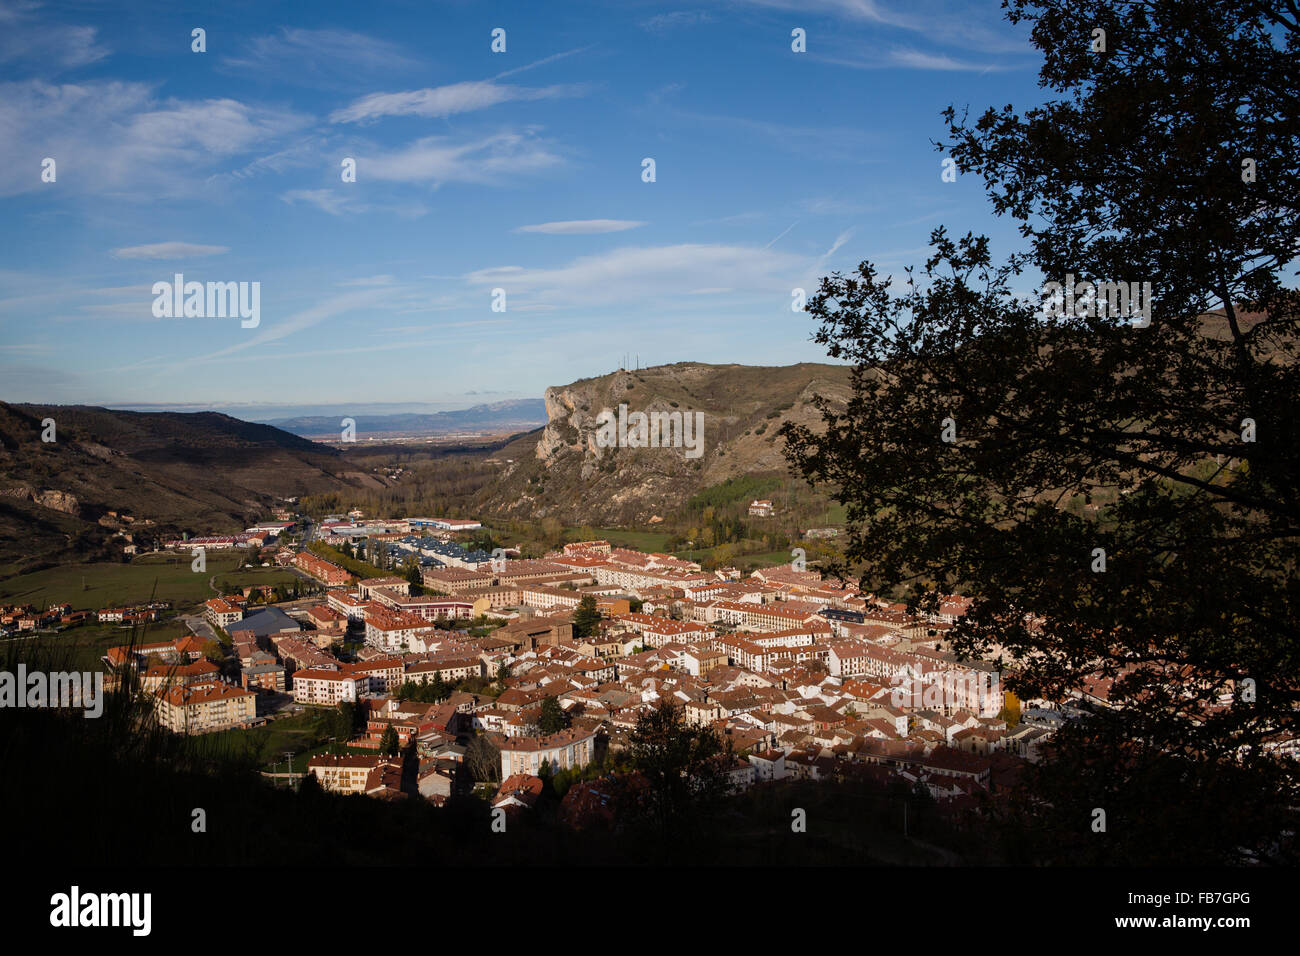 6/11/15 Tourist village of Ezcaray seen from Santa Barbara chapel, La Rioja, Spain. Photo by James Sturcke Stock Photo